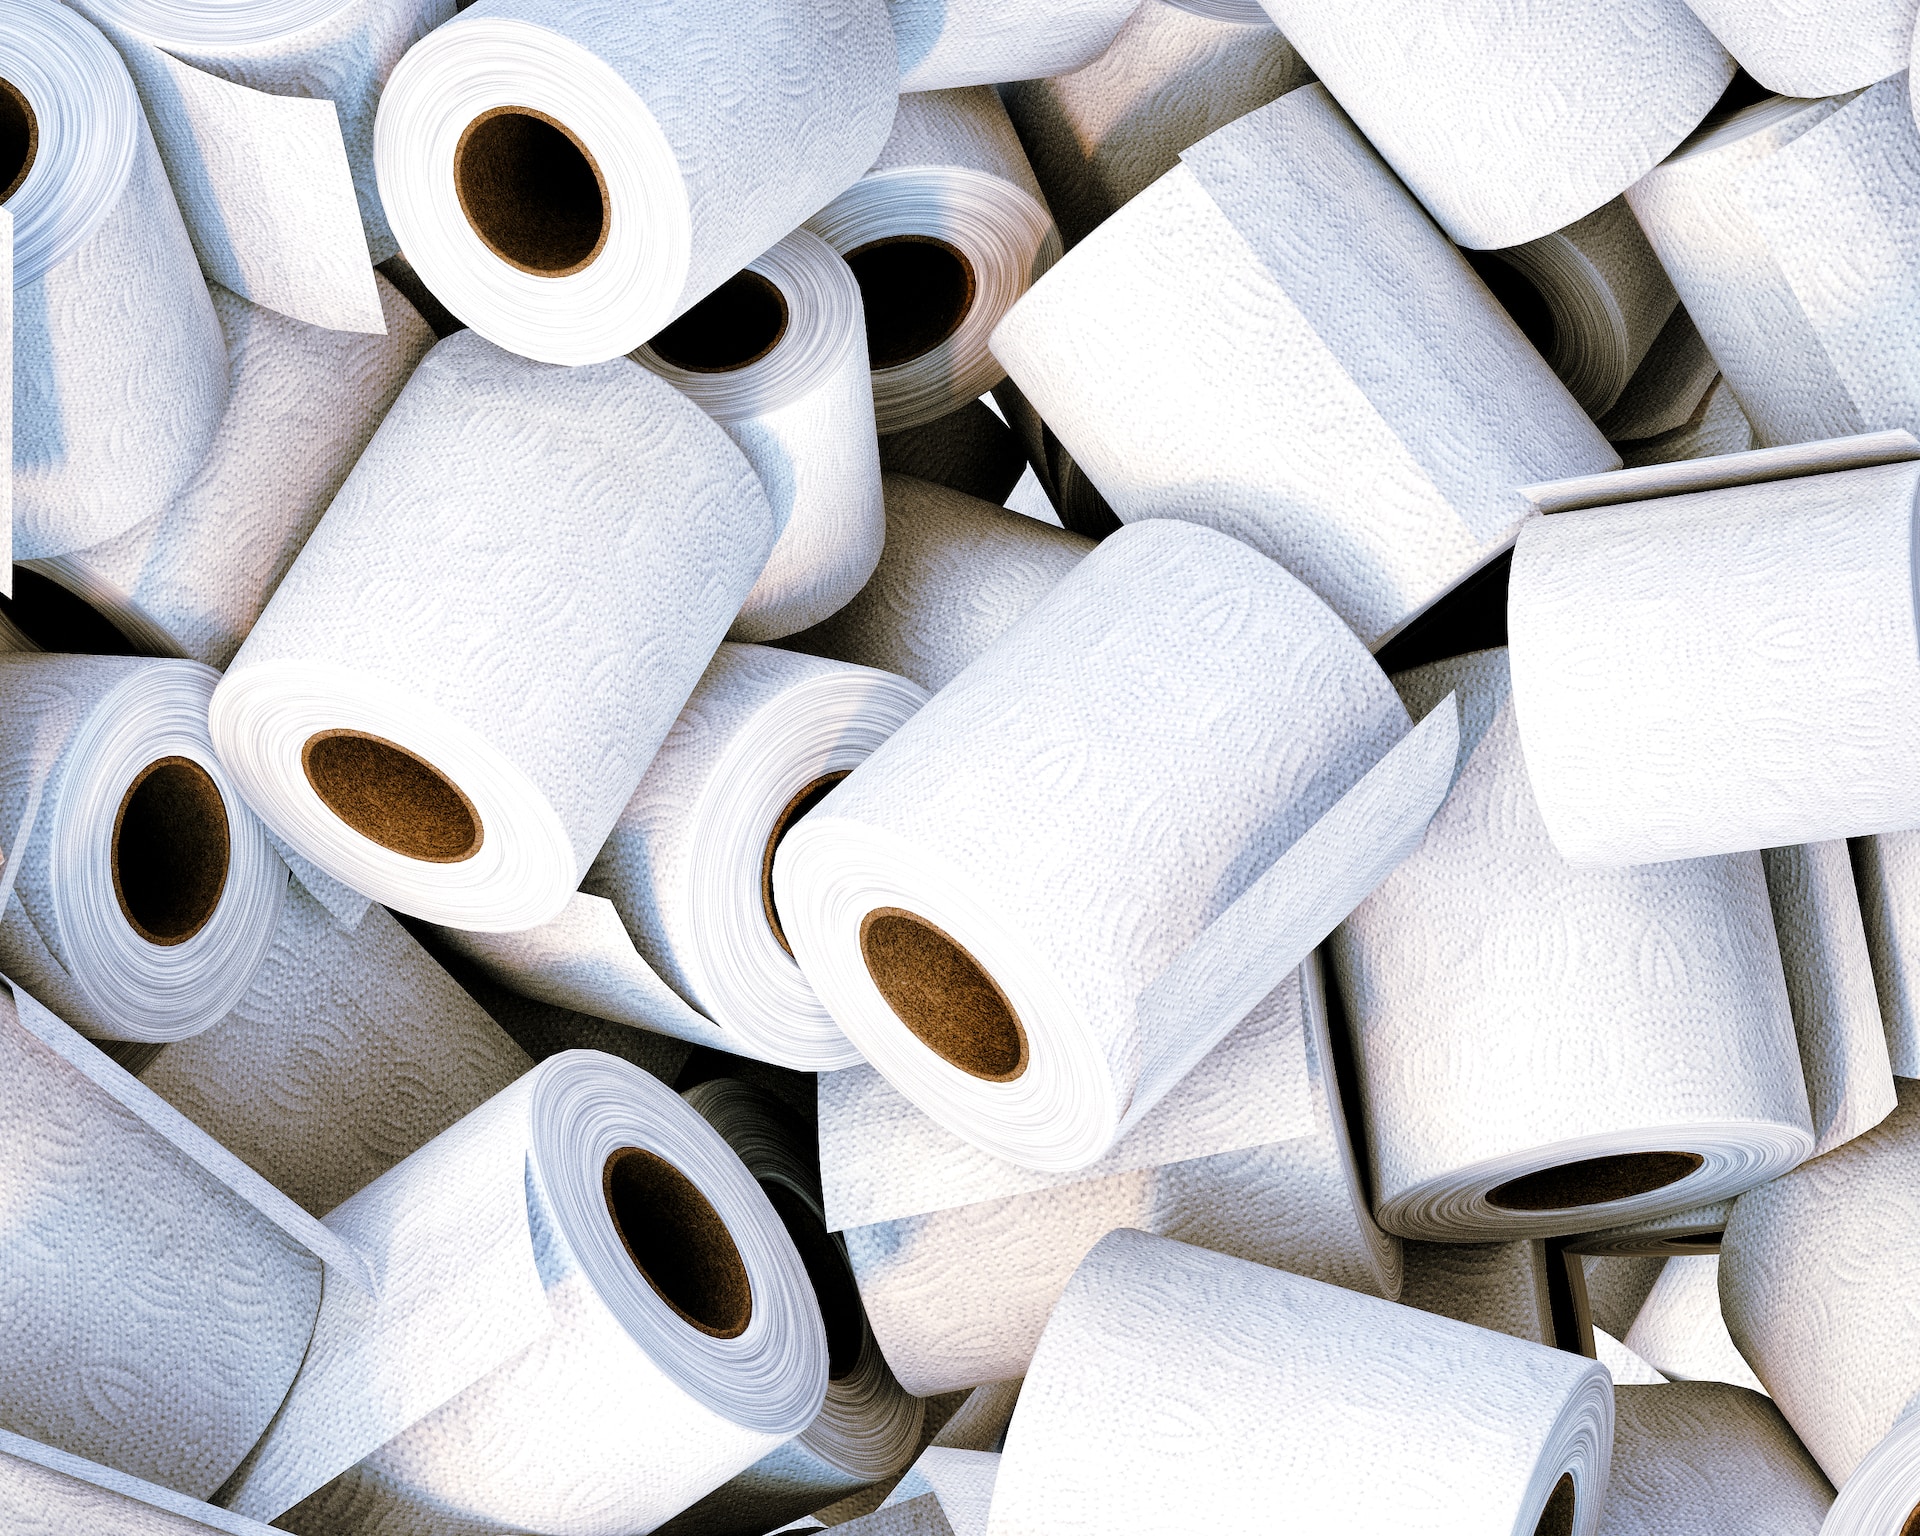 Render, Digital Image, Paper Towel, Tissue, Toilet Paper, Tissue Paper, Bathroom, Tissues, Toiletries, Toilet, Paper Backgrounds, Towel